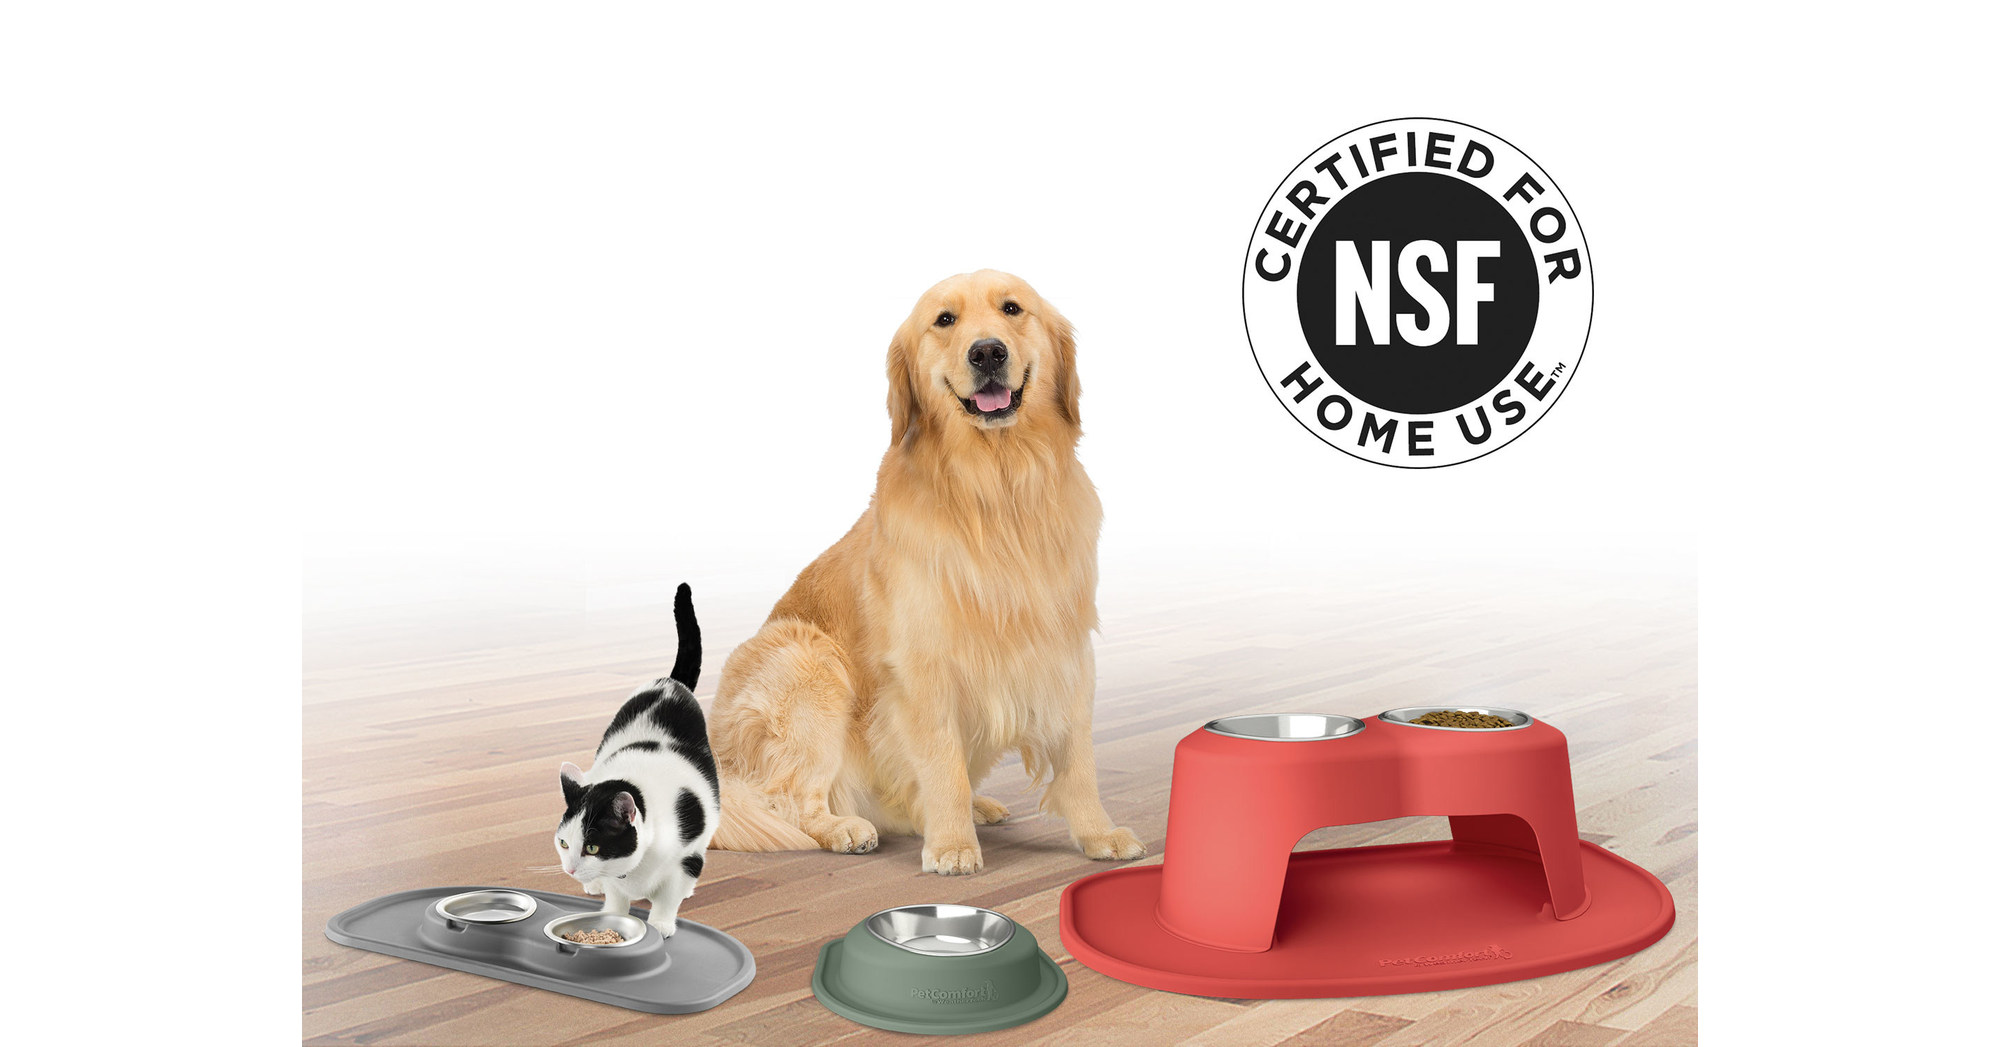 NSF International Certifies WeatherTech's PetComfort Feeding System to  Human Safety Standards